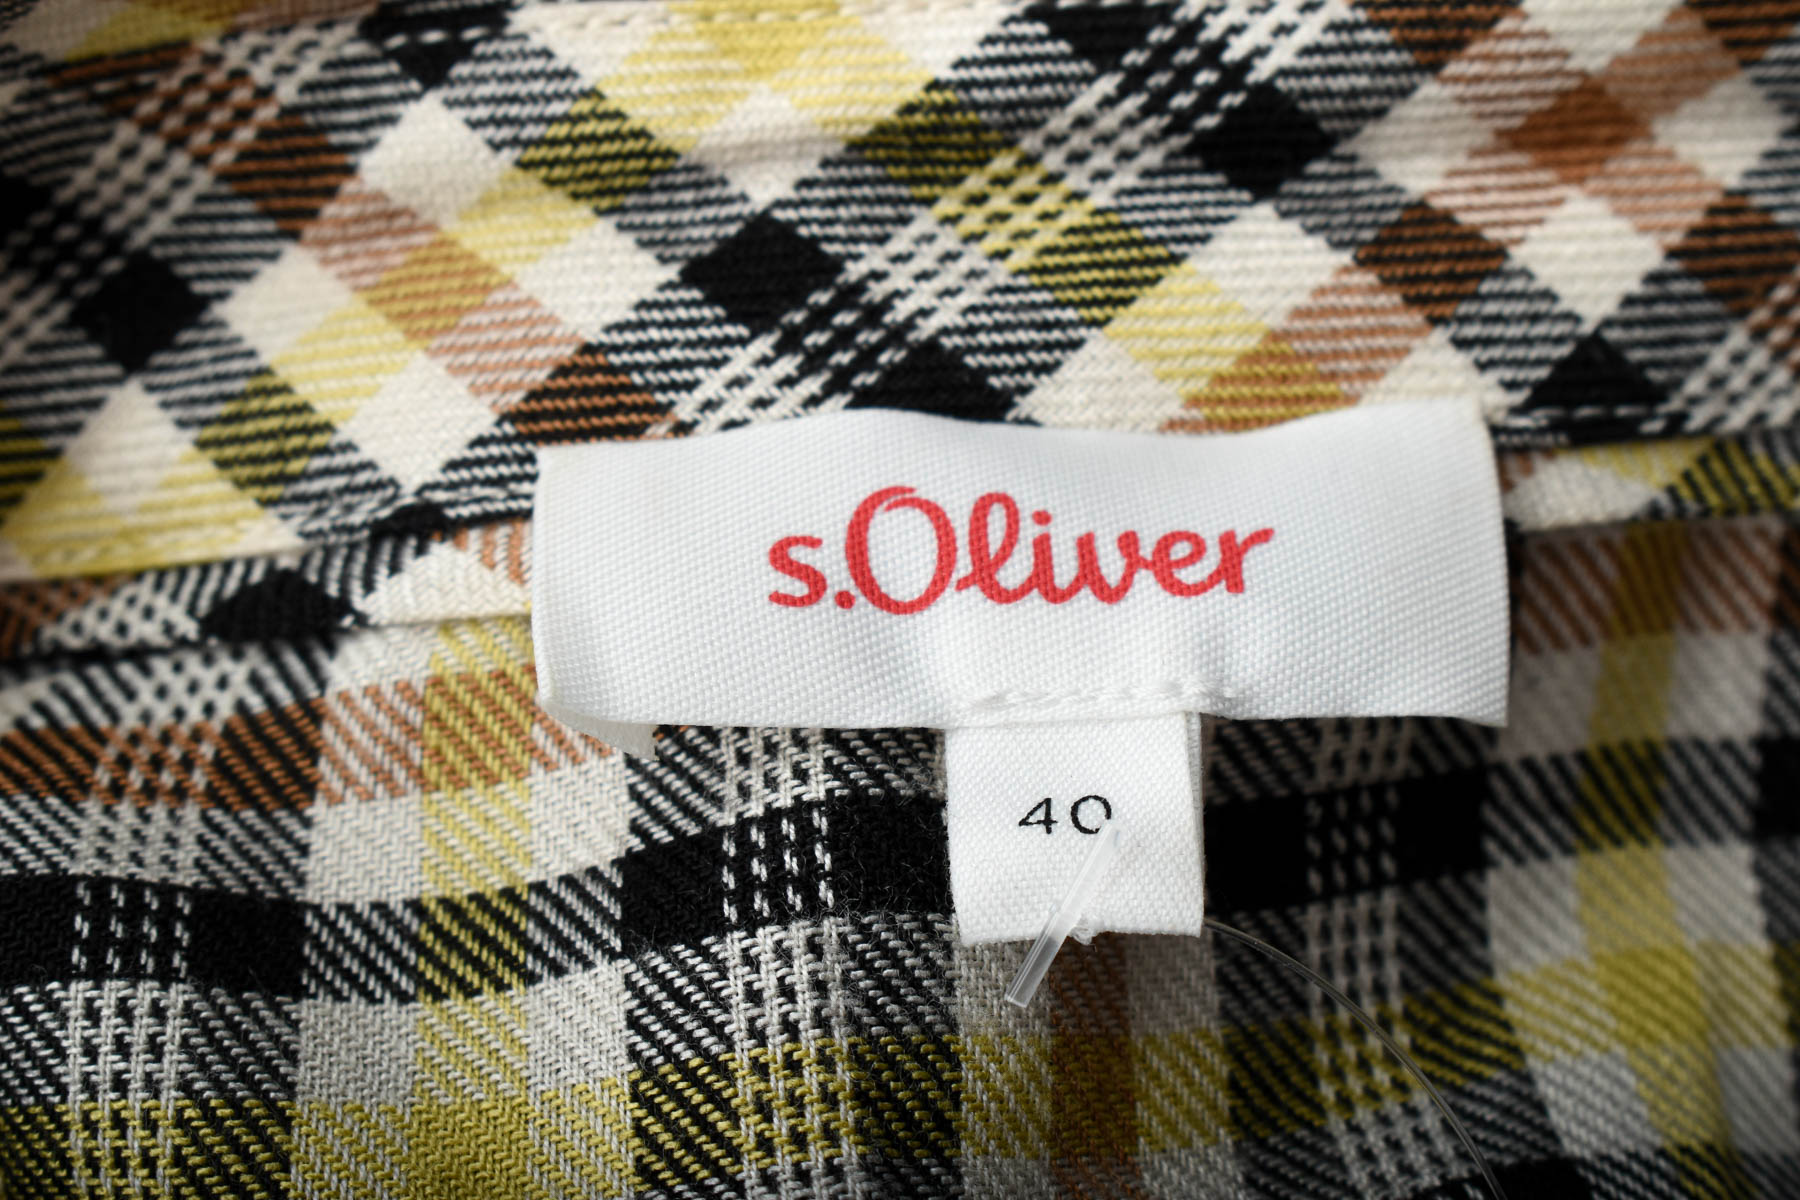 Women's shirt - S.Oliver - 2